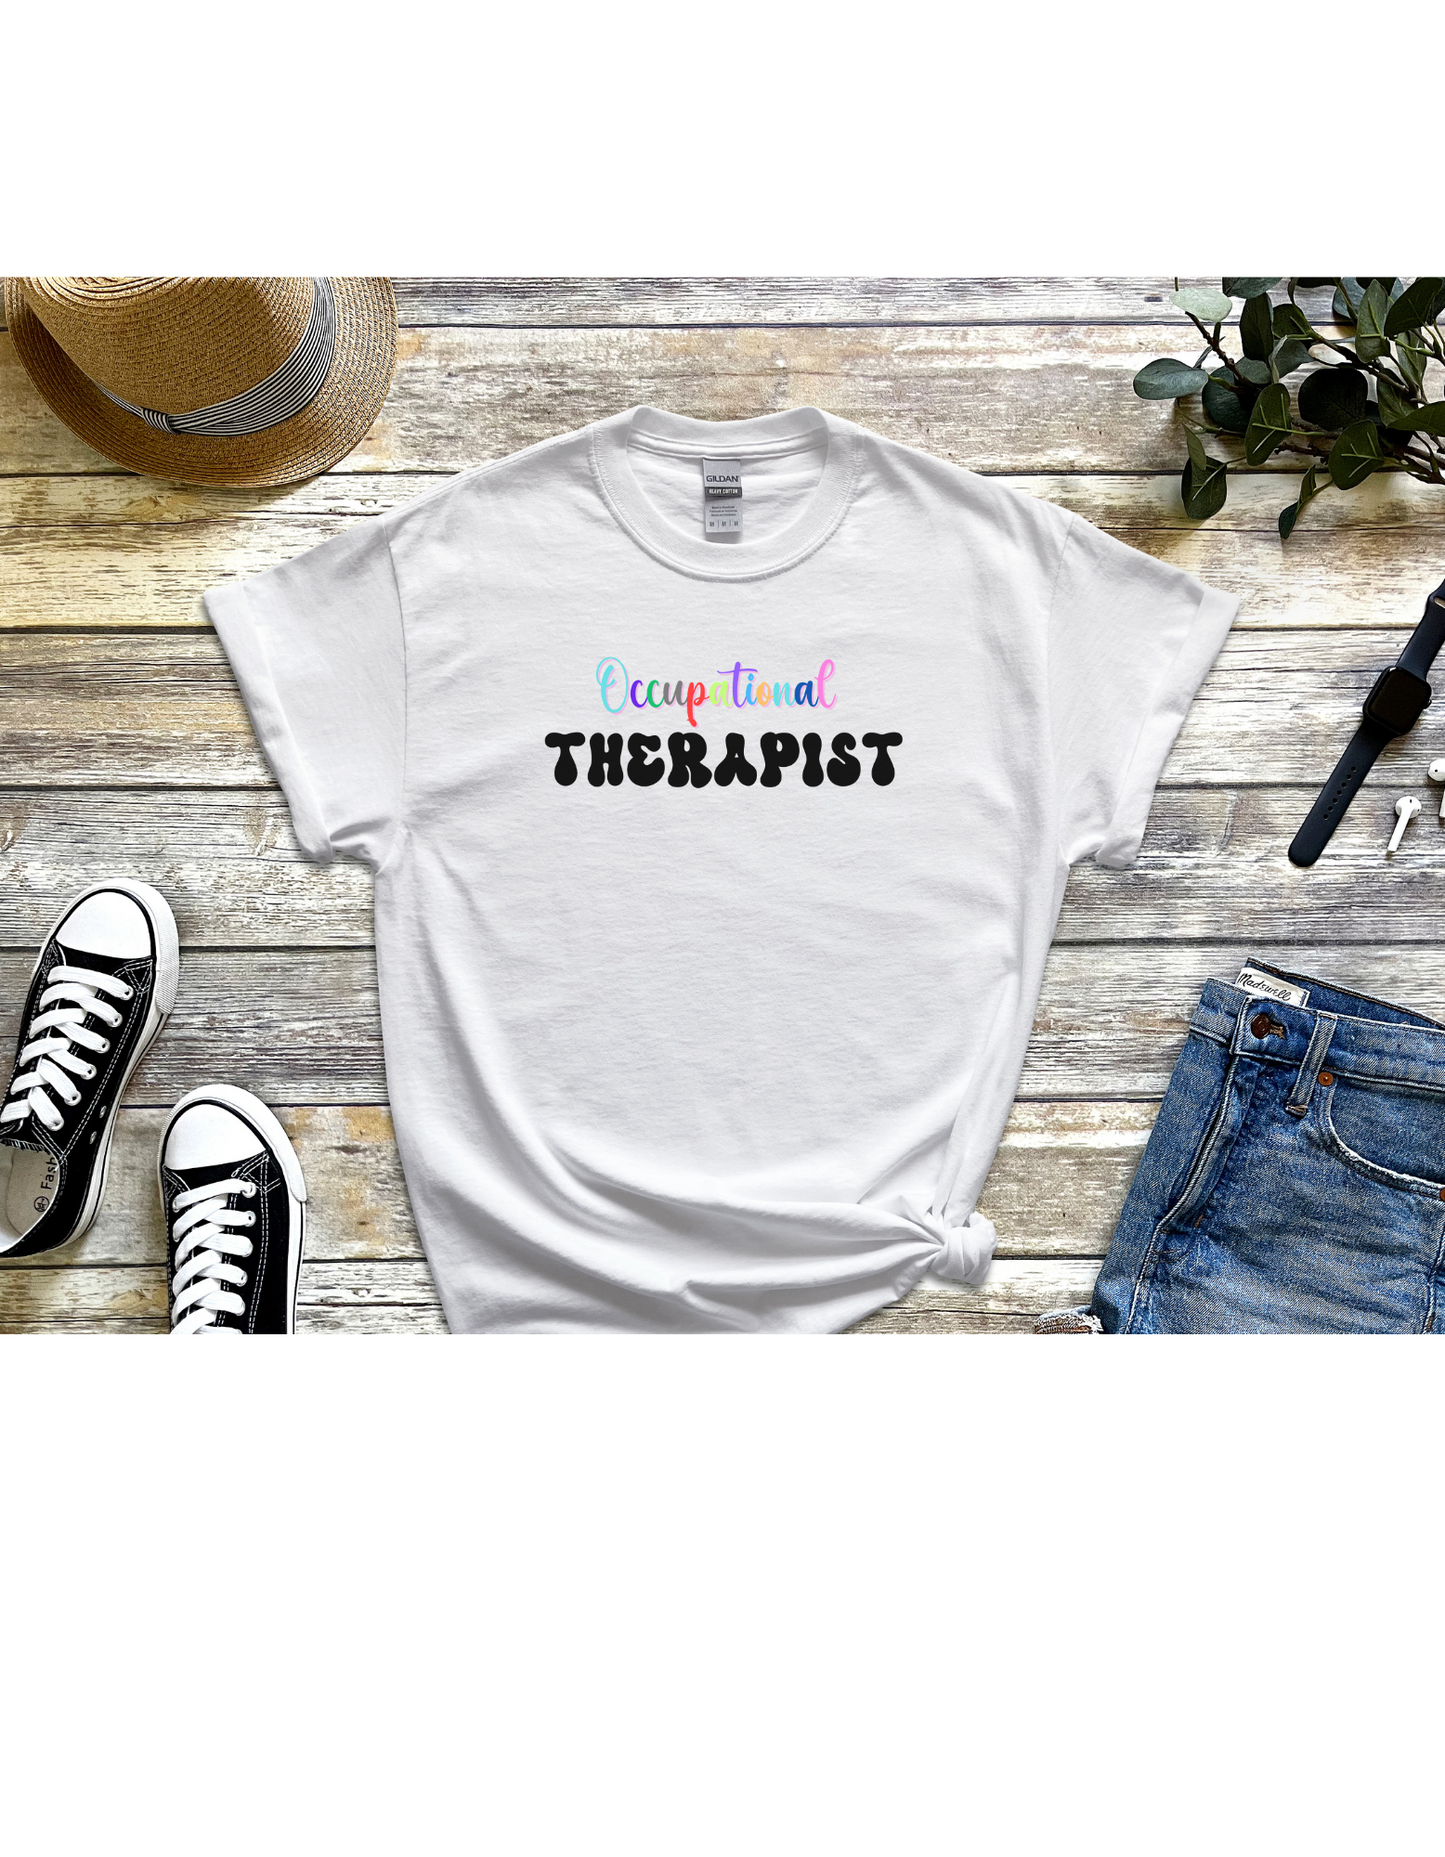 Occupational Therapist T-Shirt, OT Gift, Occupational Therapy Shirt, Gift for OT, Therapy Tee